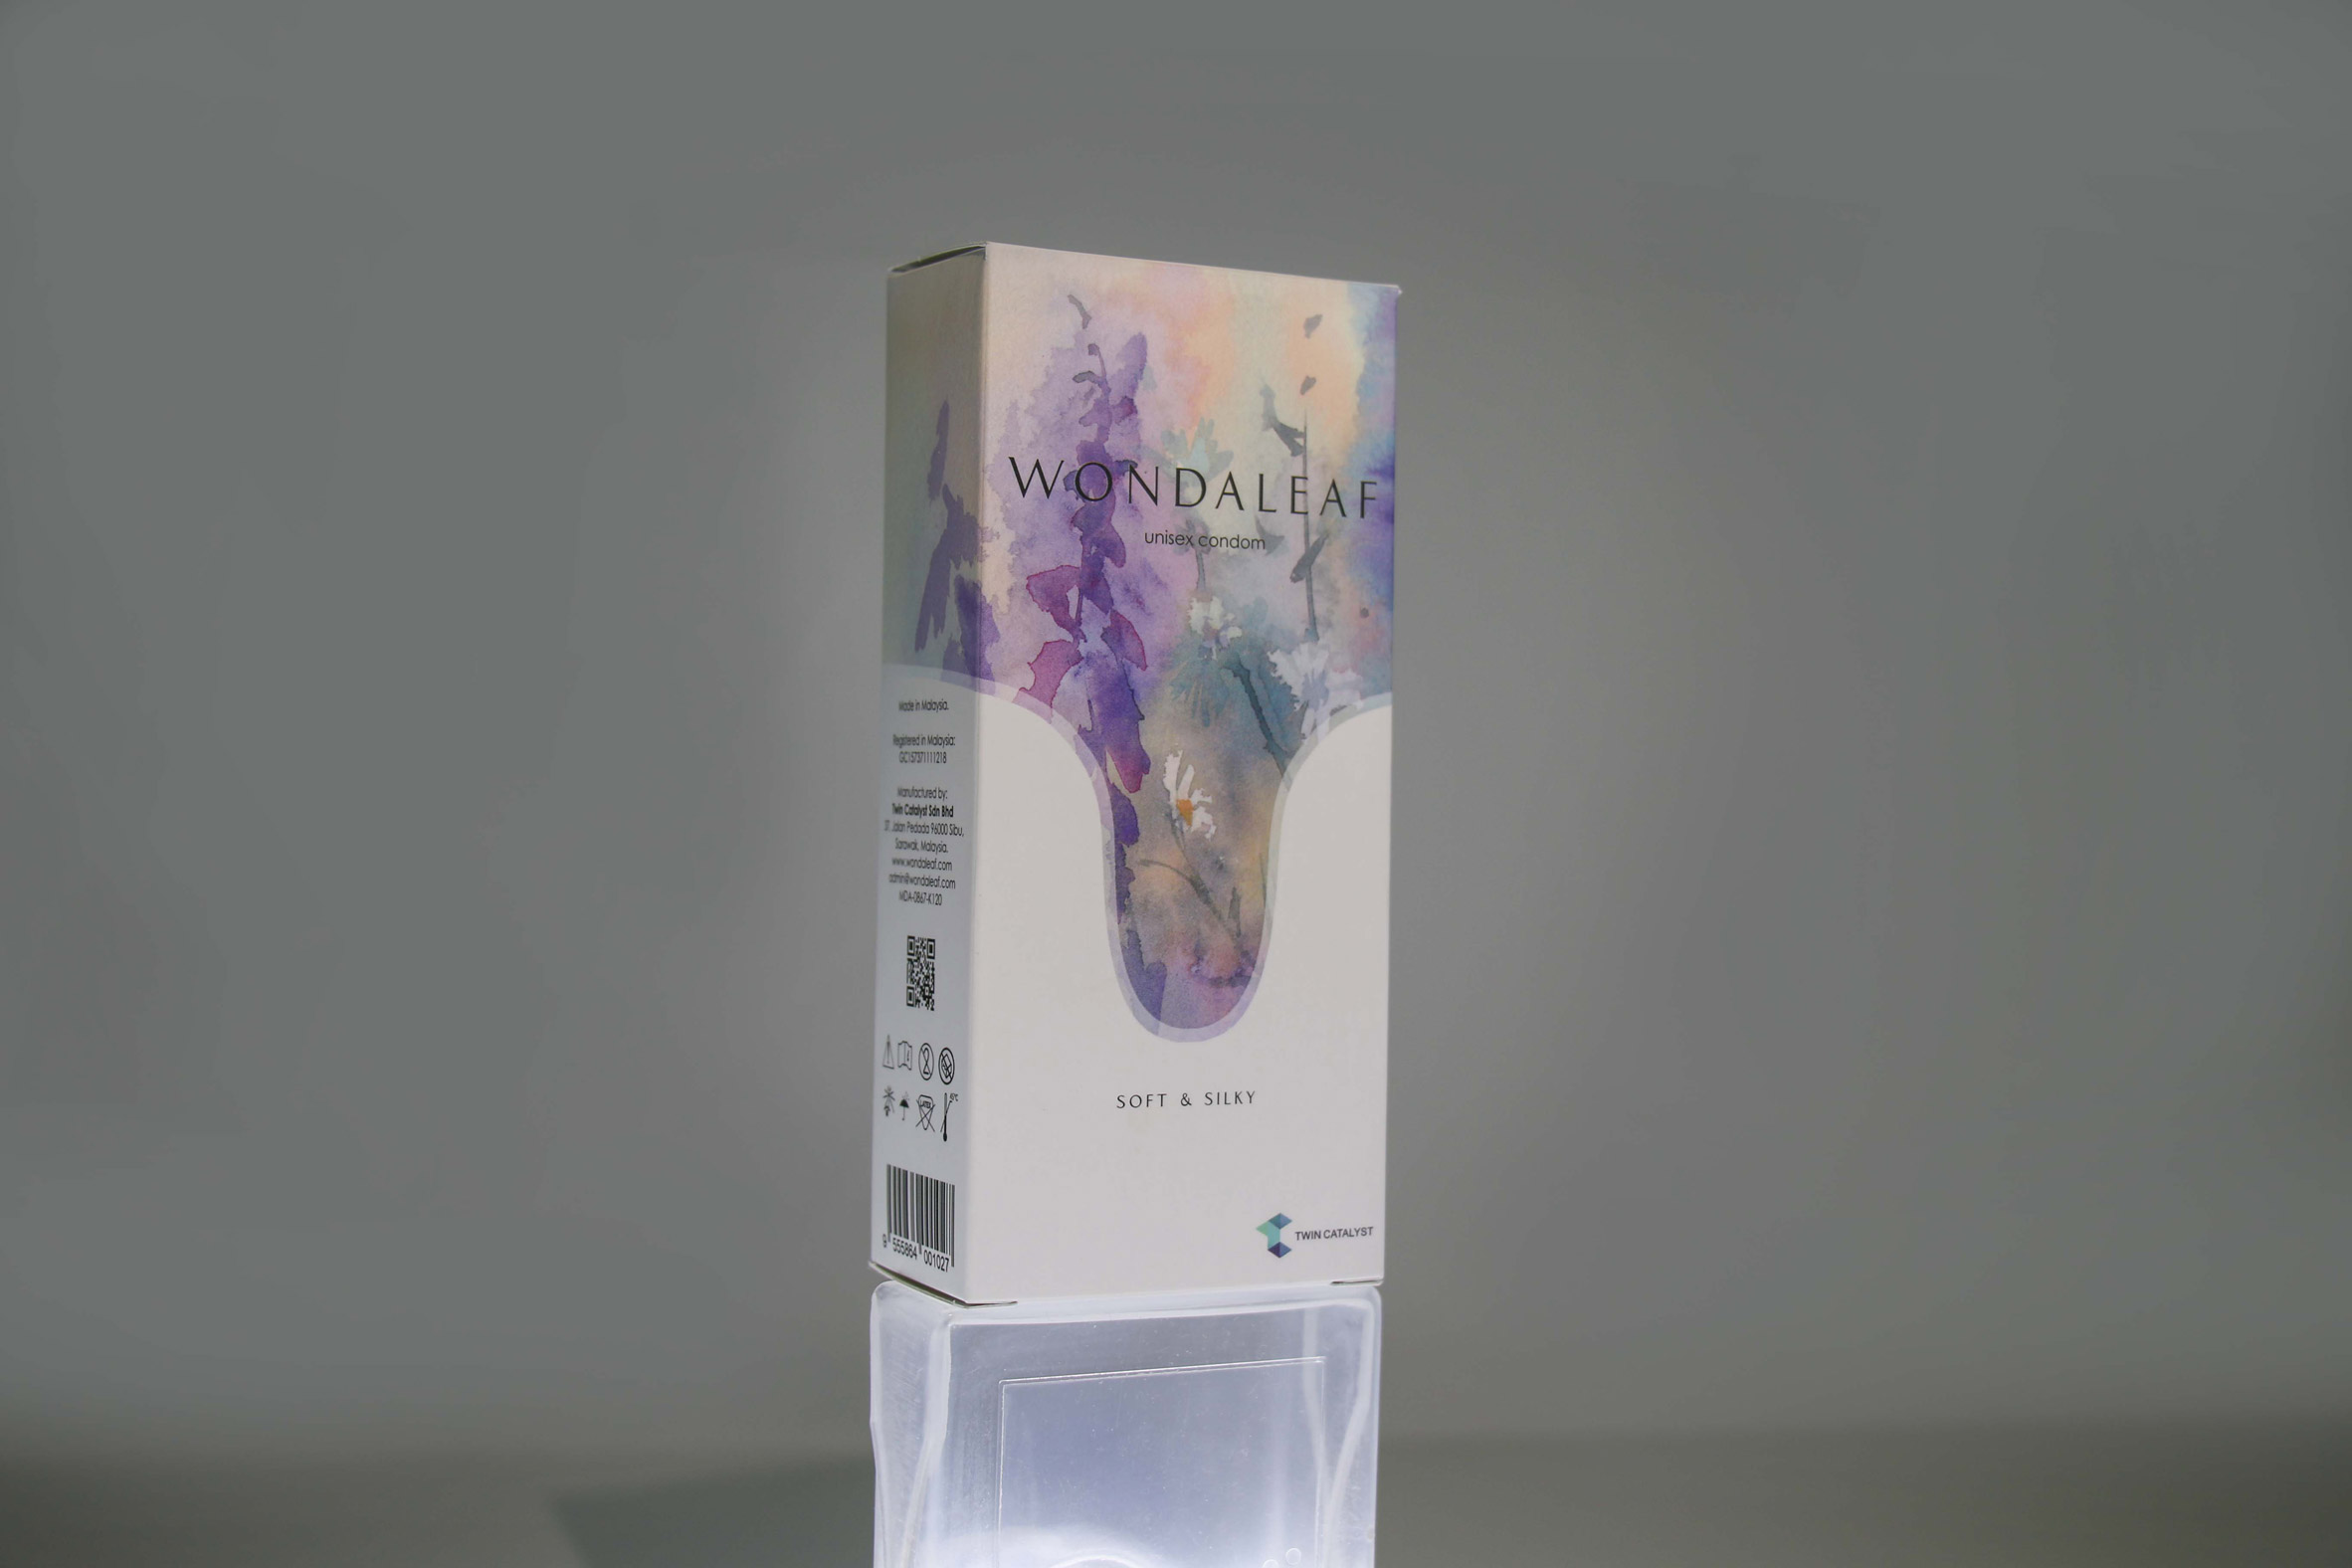 A white packet of Wondaleaf condoms